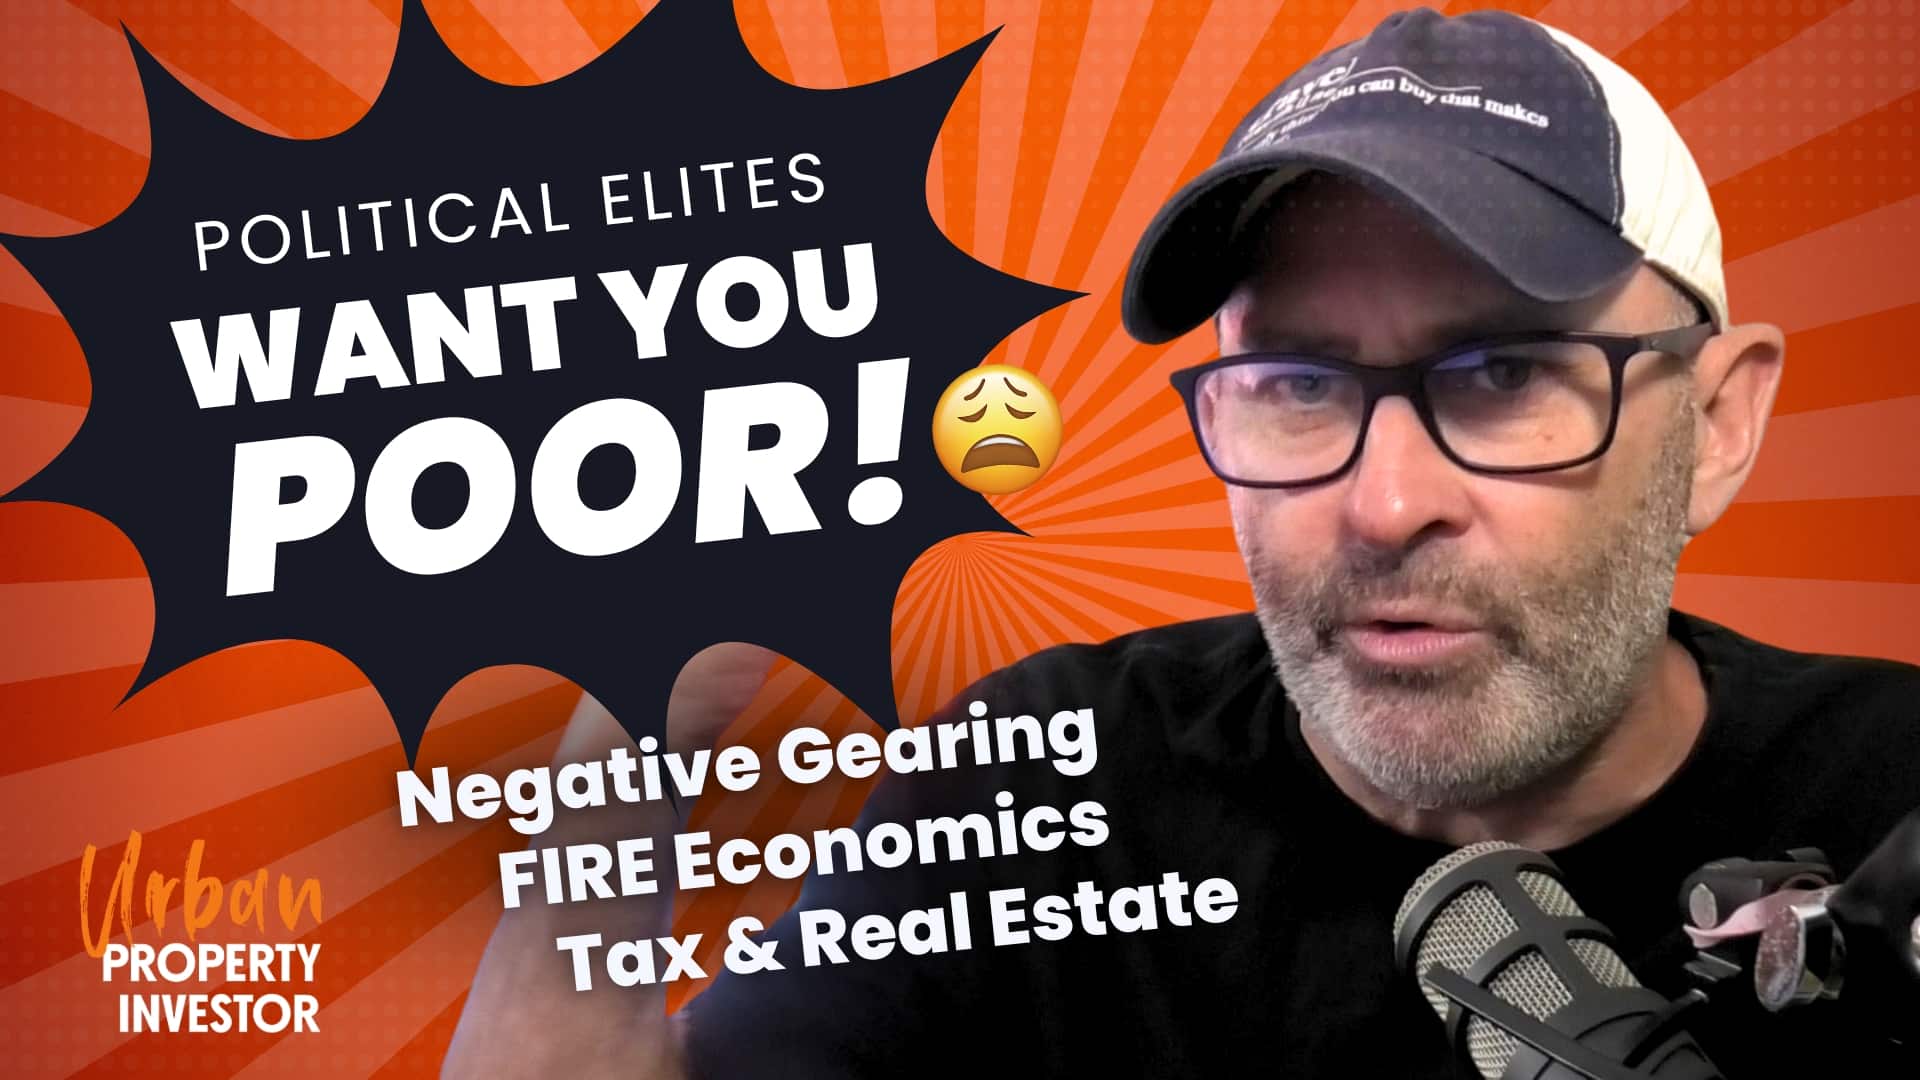 Political Elites Want You Poor! Negative Gearing, FIRE Economics, Tax & Real Estate